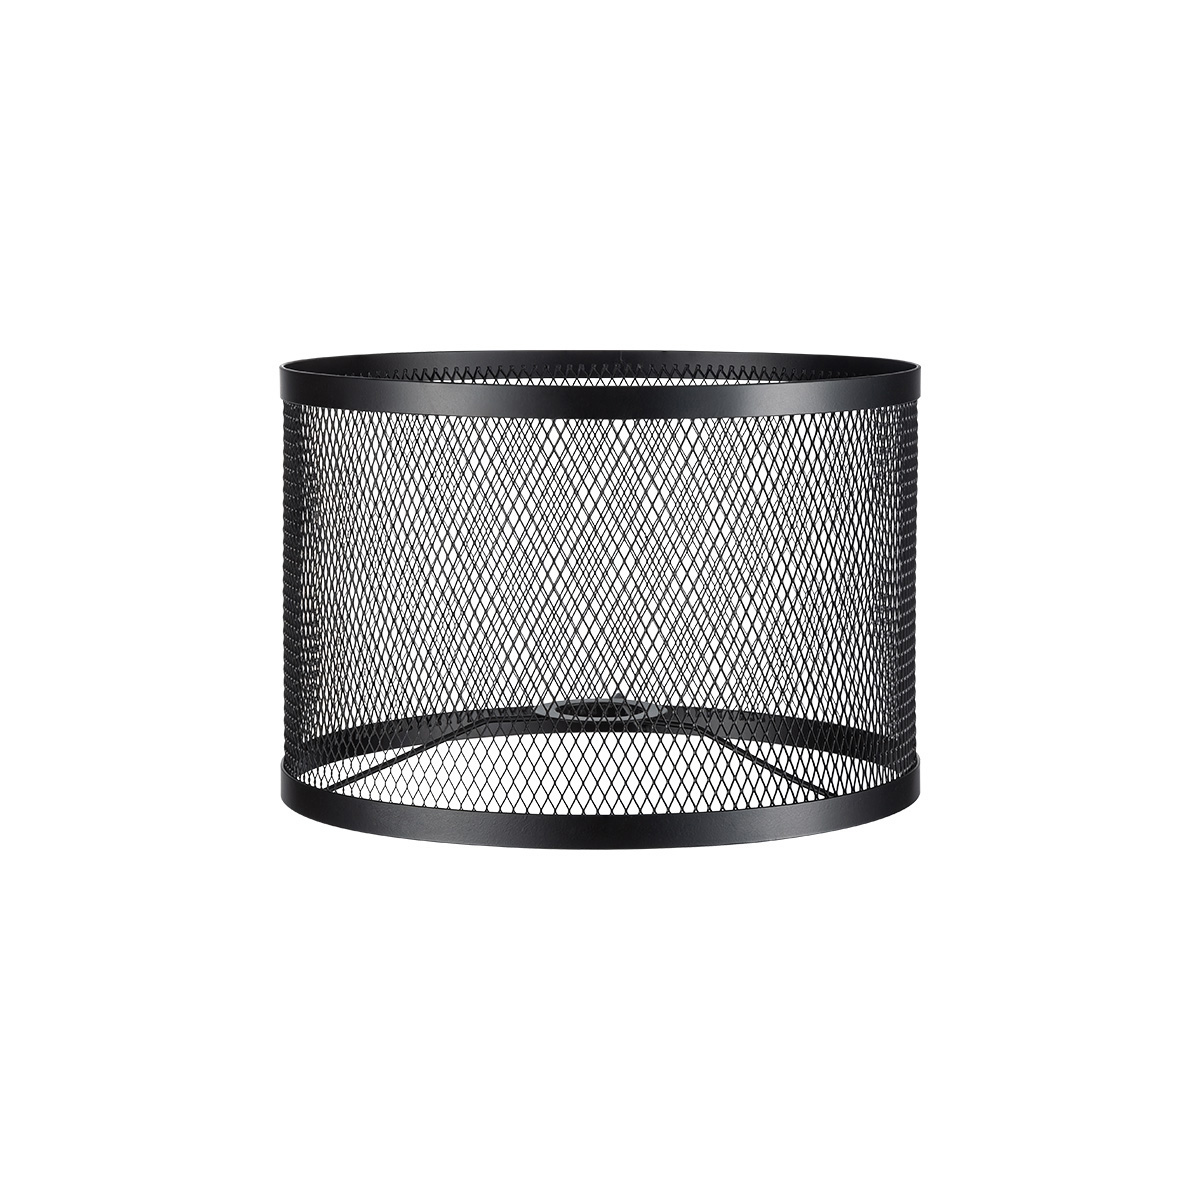 Tangla lighting - TLS7646-30BK - Decorative Lampshade - metal wire mesh in black - industrial black - Φ30cm - E27